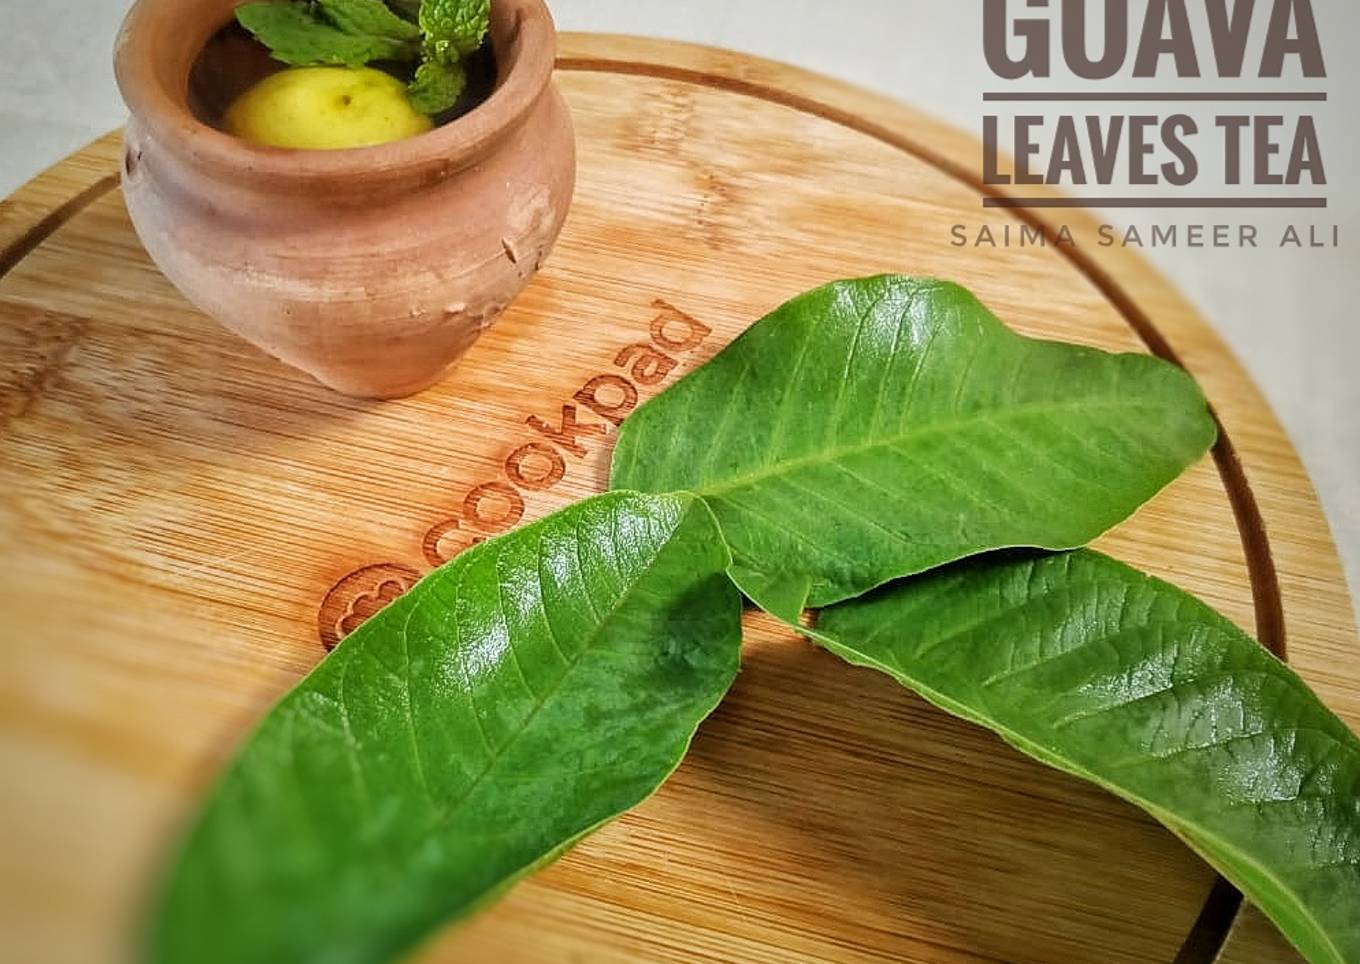 Guava leaves tea